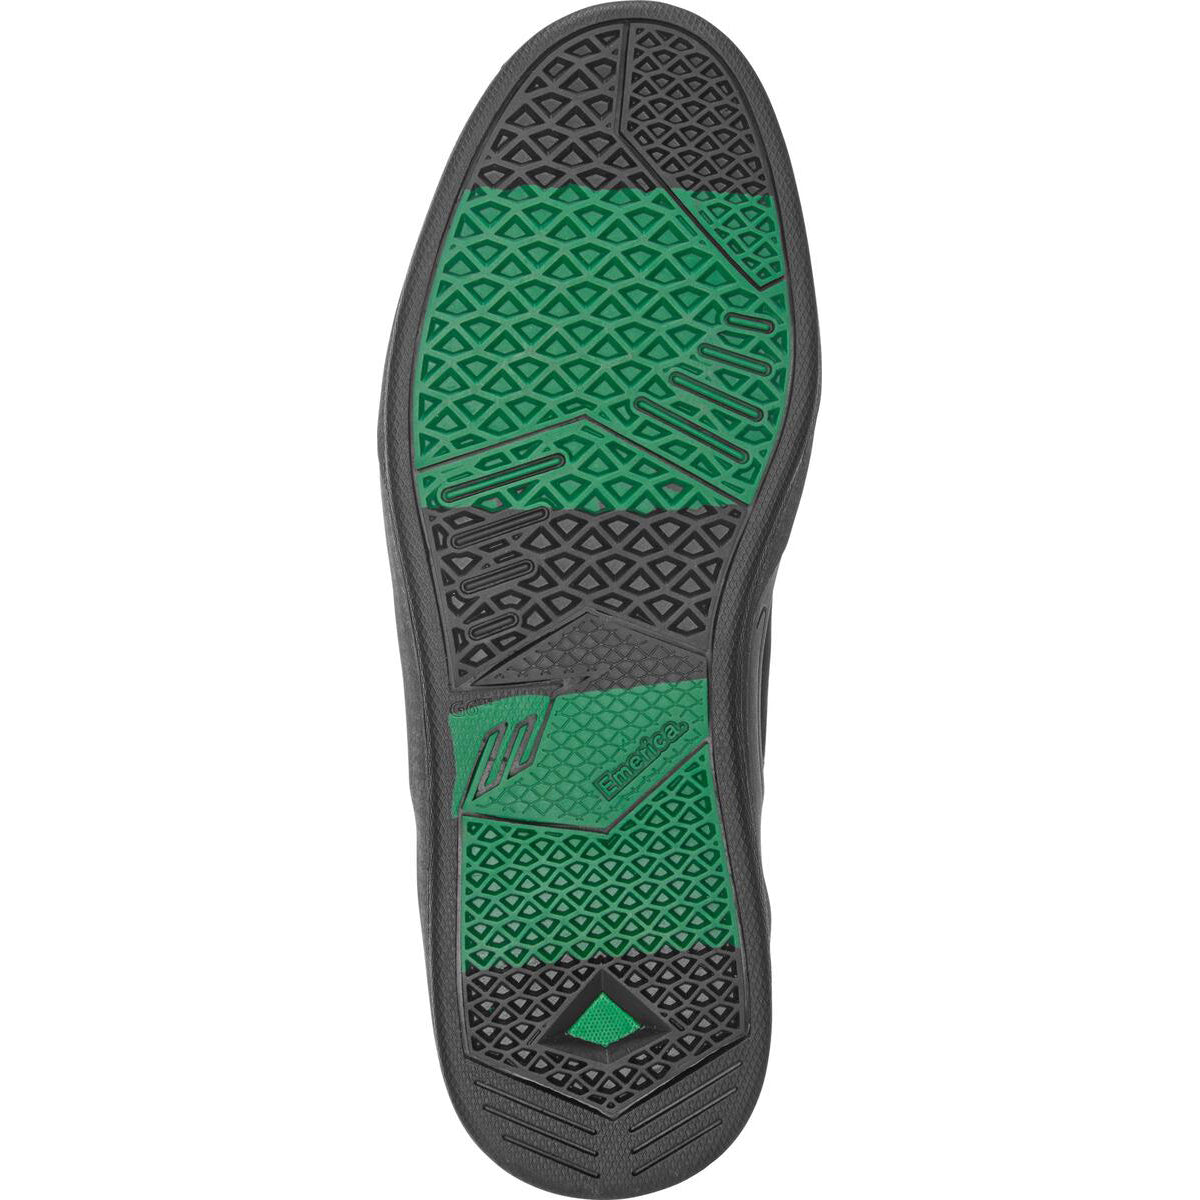 Emerica Braden Hoban Wino G6 Slip Cup Black/Green Shoes